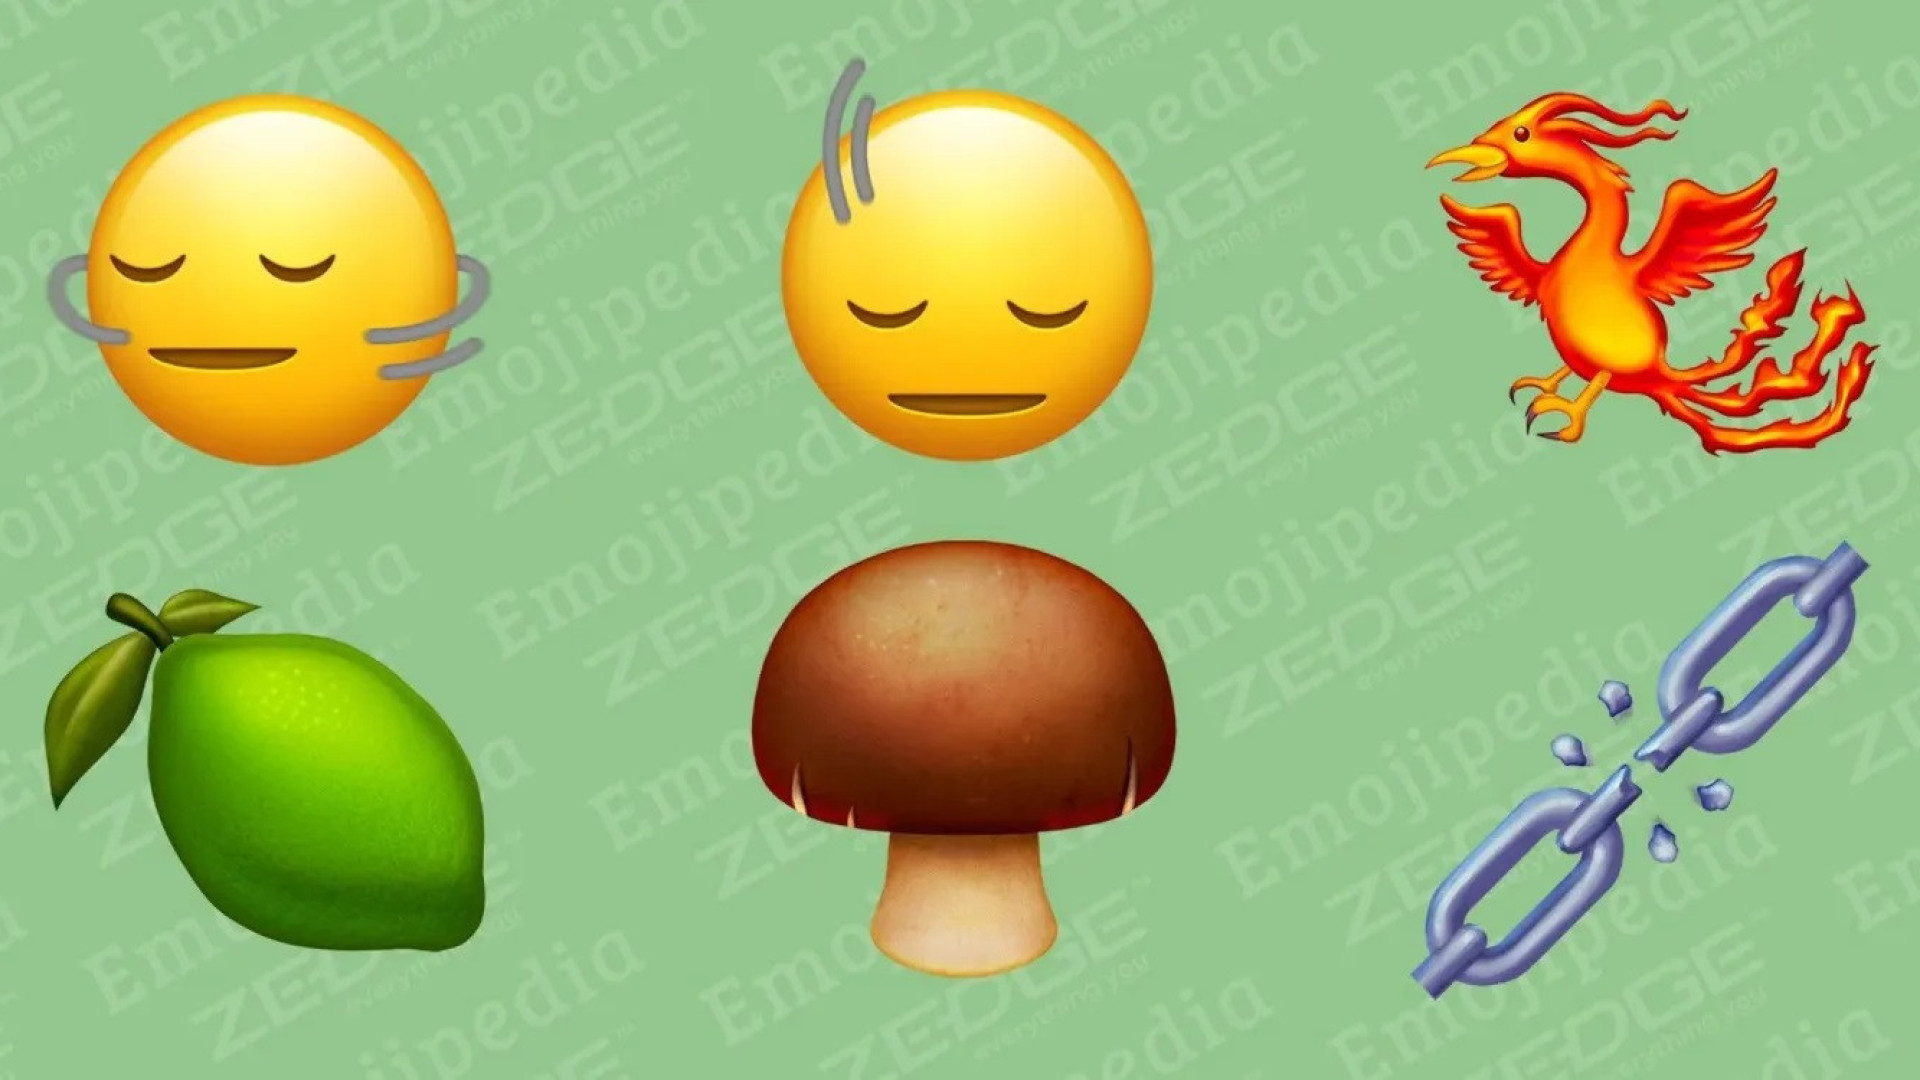 Últimas Notícias Emoji - Edital Concursos Brasil